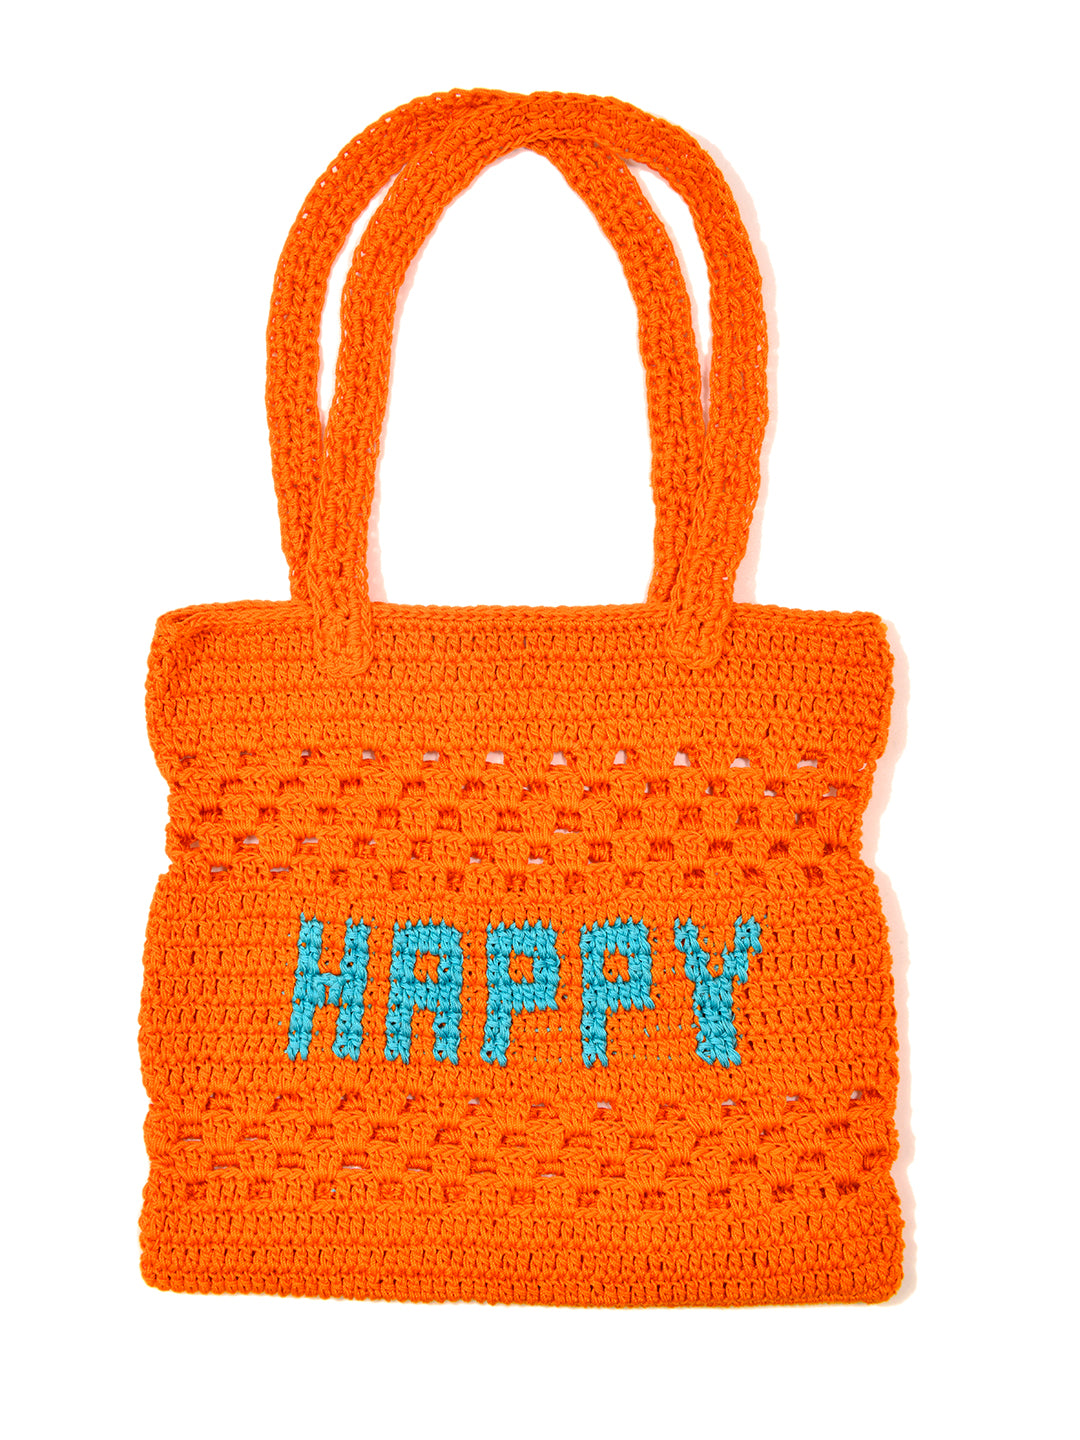 Crochet Pattern Happy Handmade Bag 